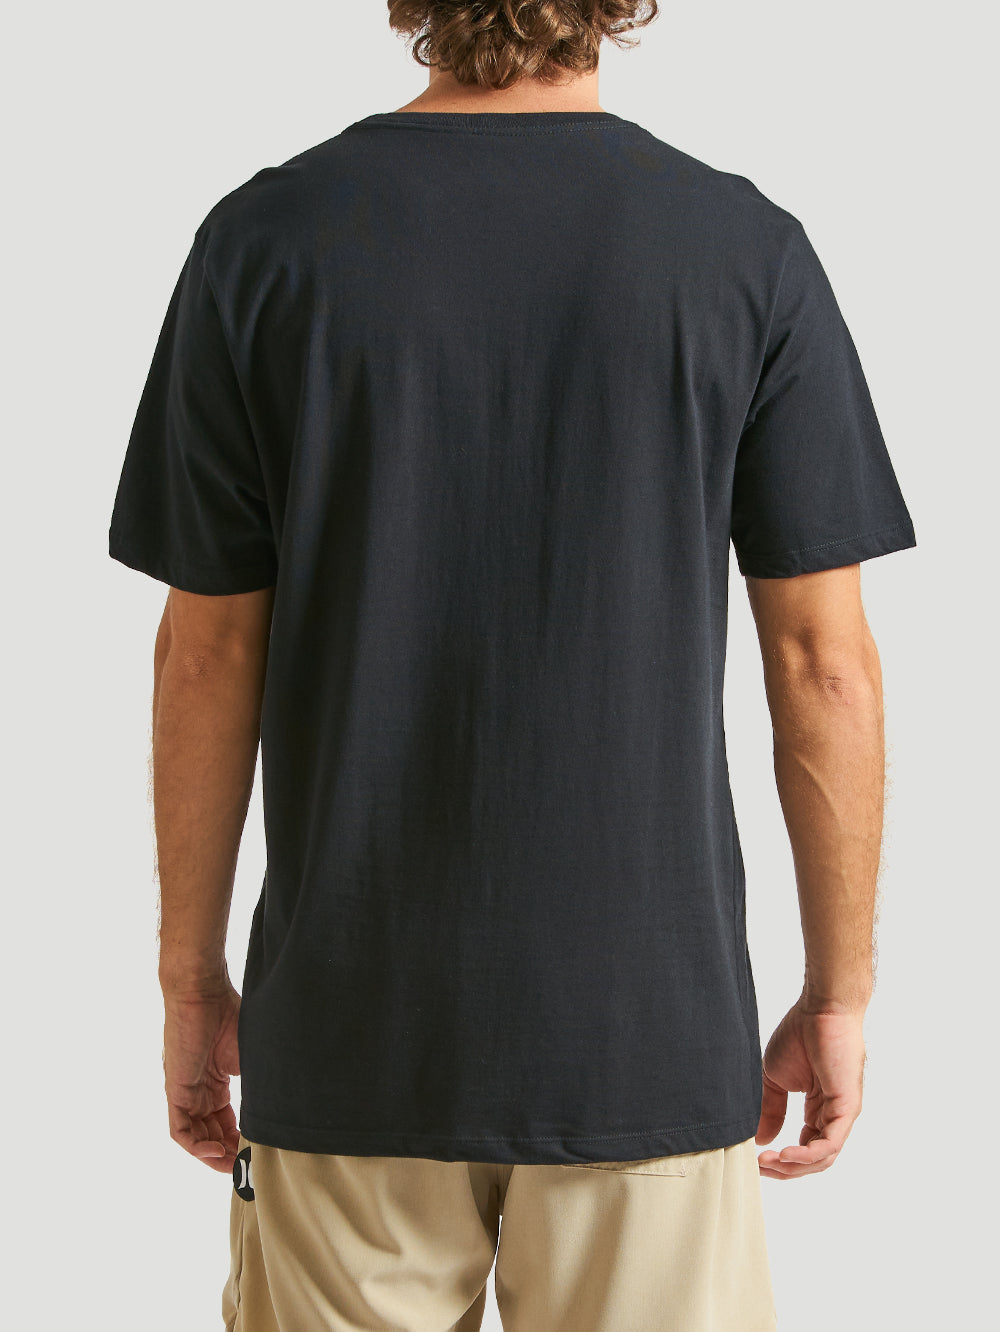 Camiseta Hurley O&O Solid Preto